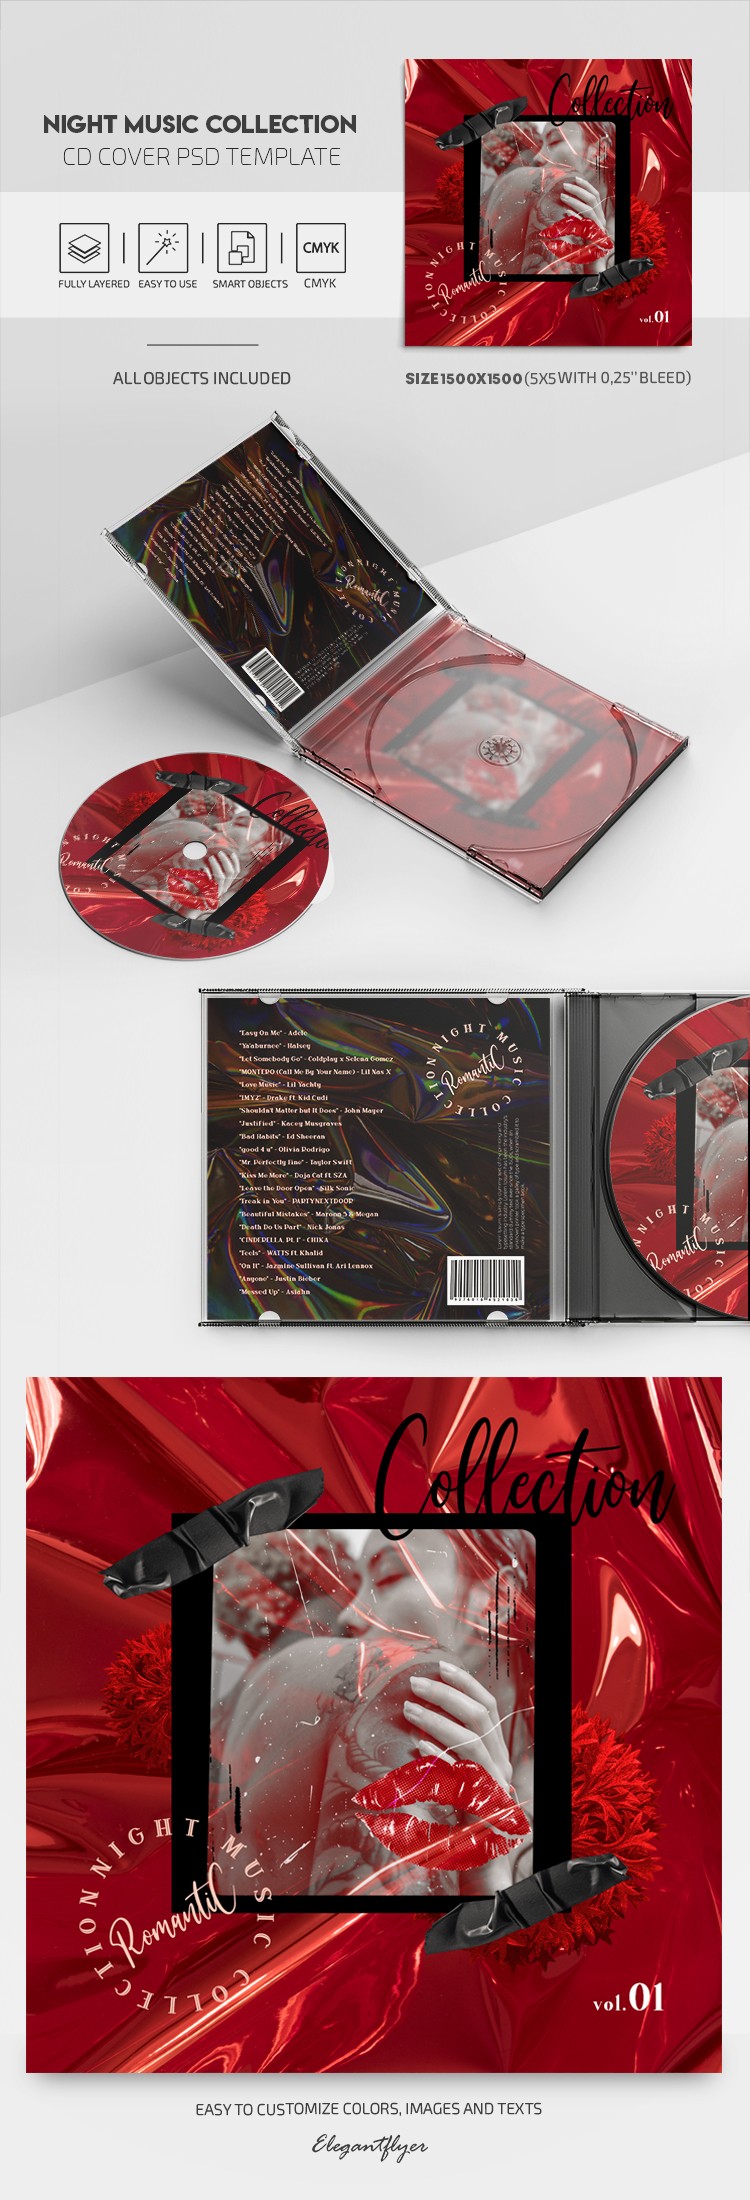 Capa do CD Night Music Collection by ElegantFlyer